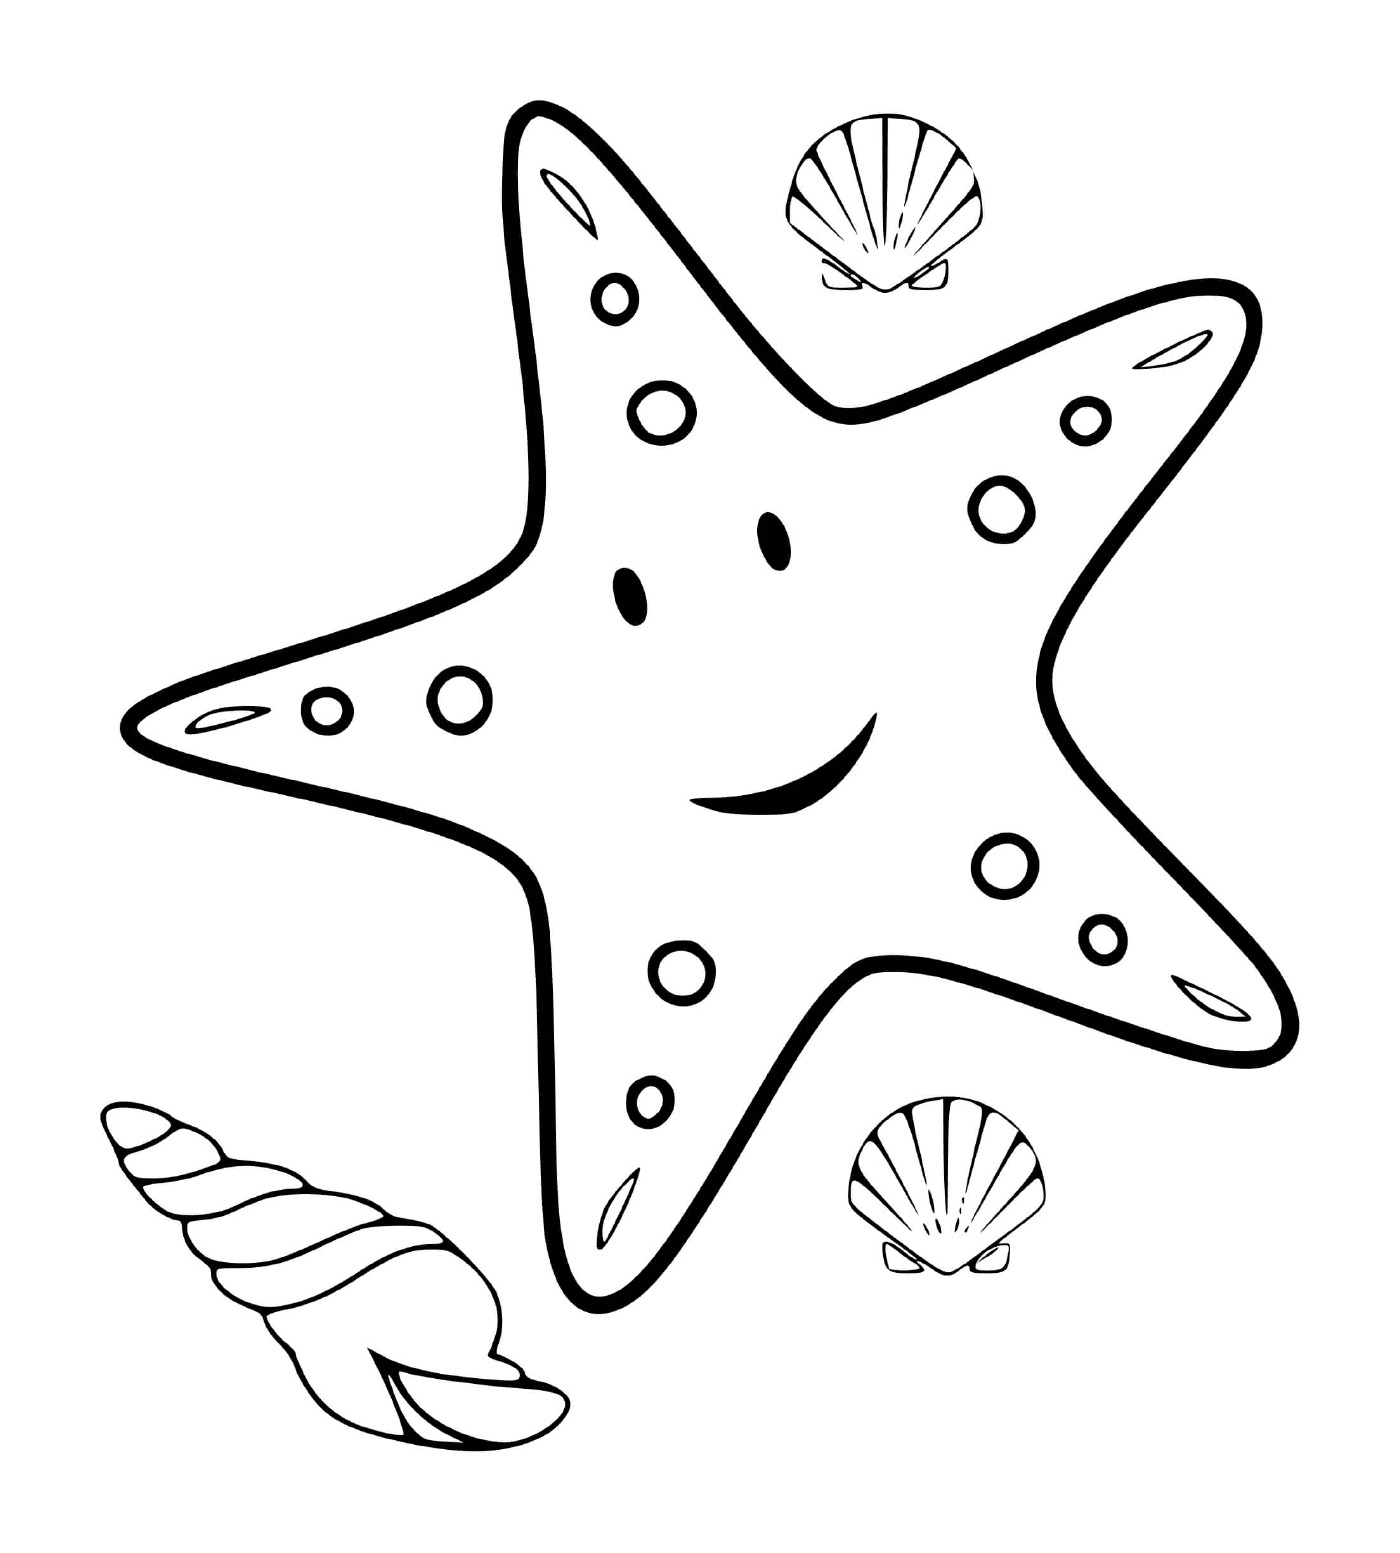  звезда моря и моллюсков 